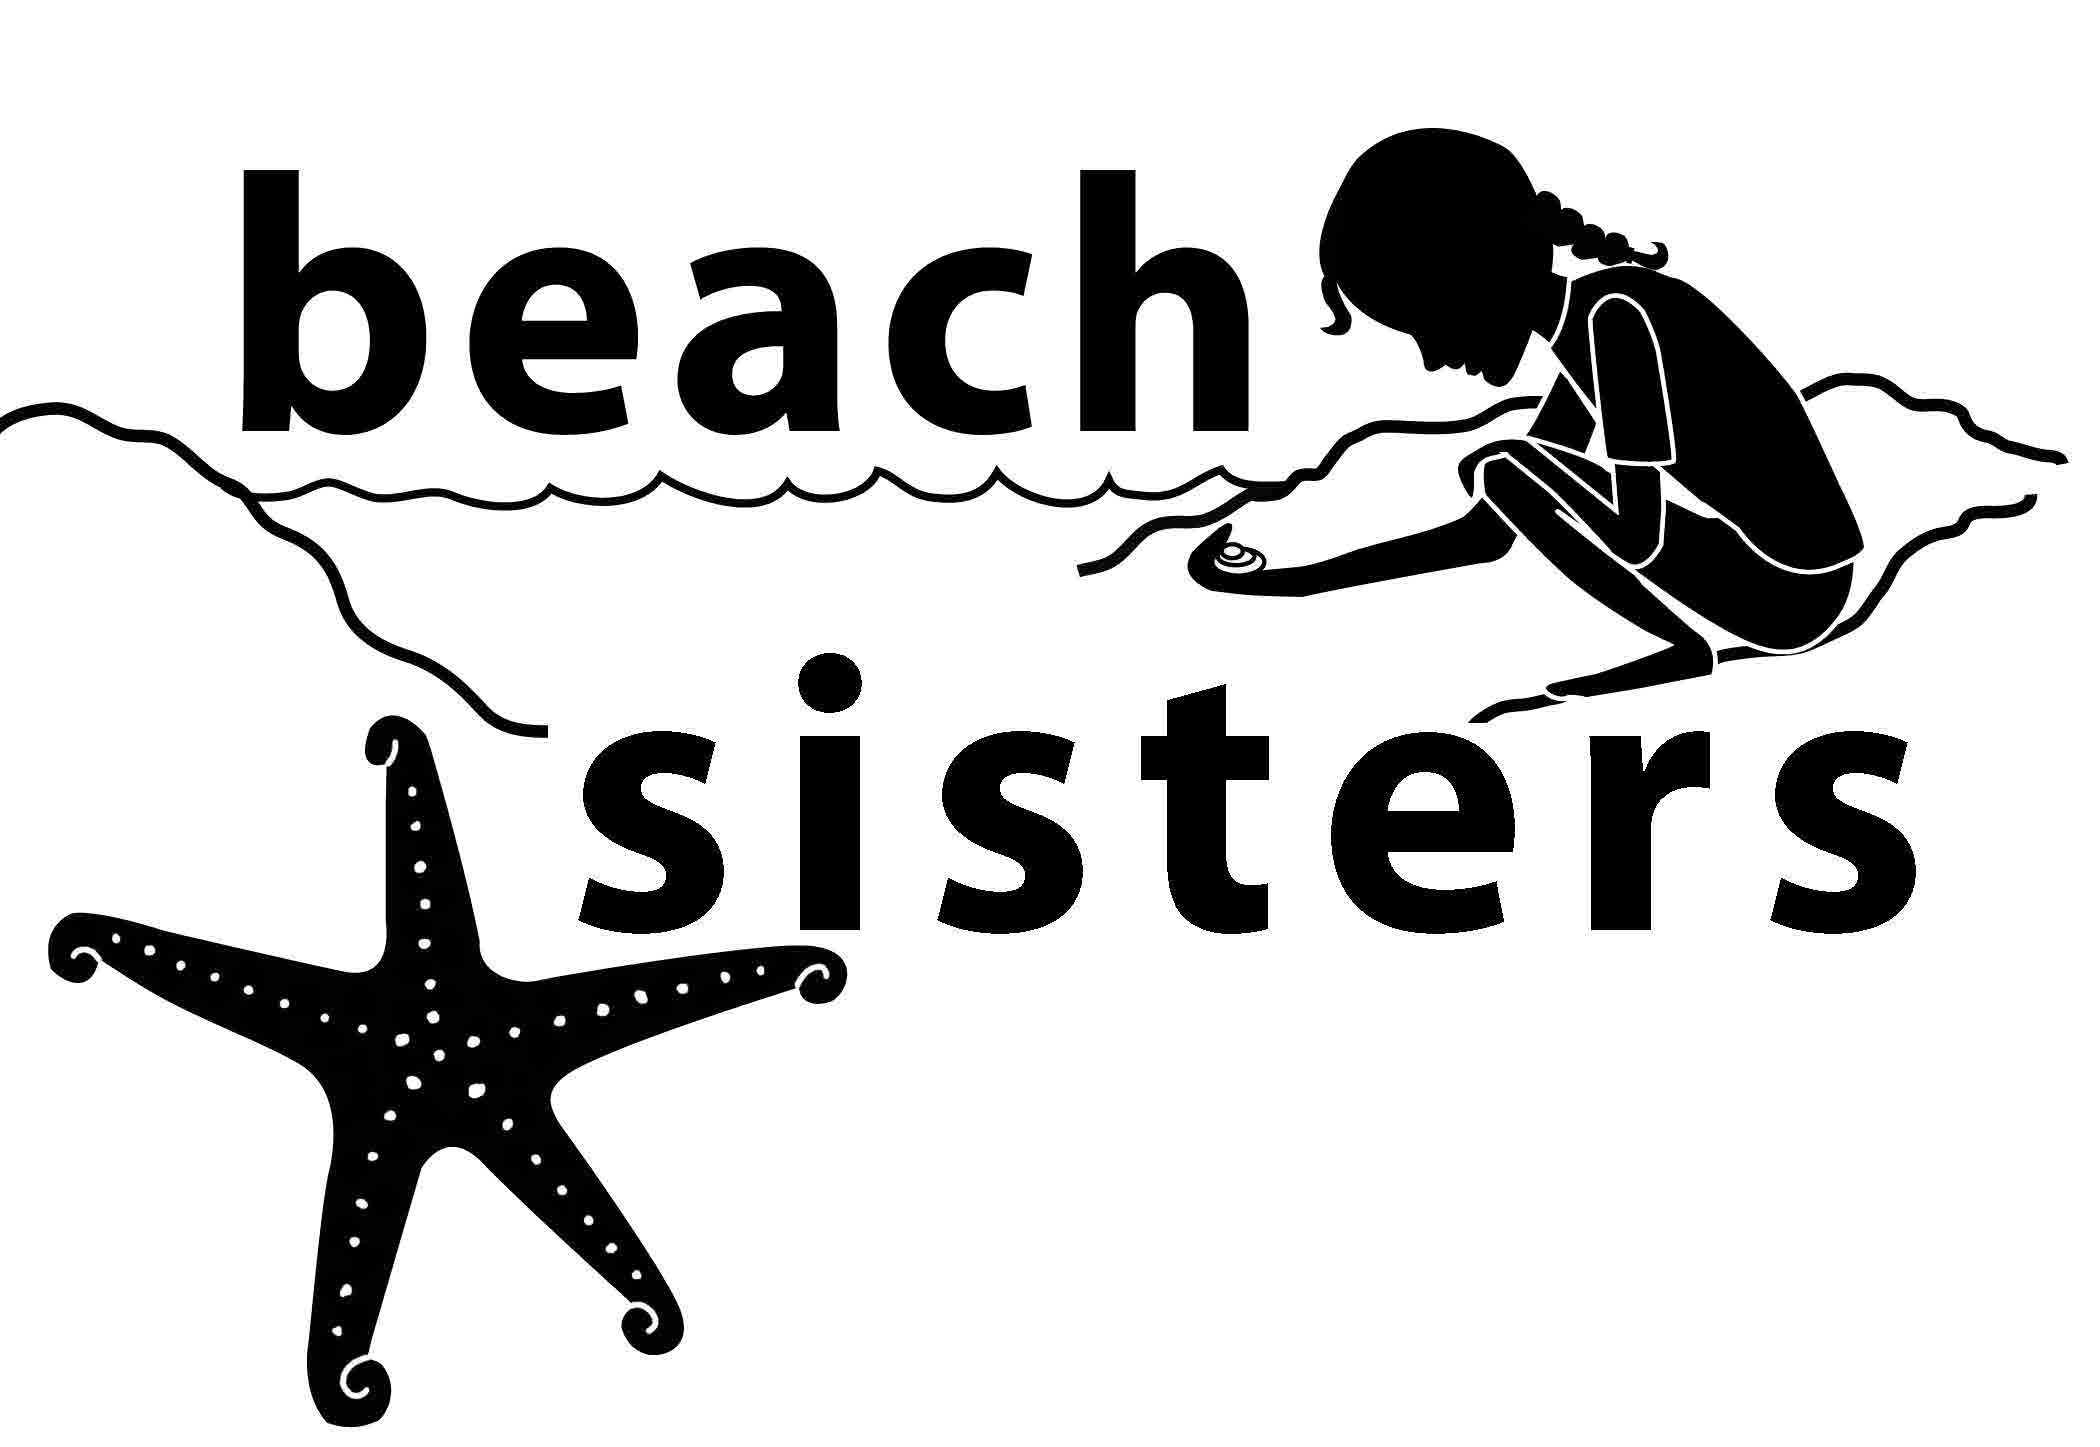 BEACH SISTERS (1)